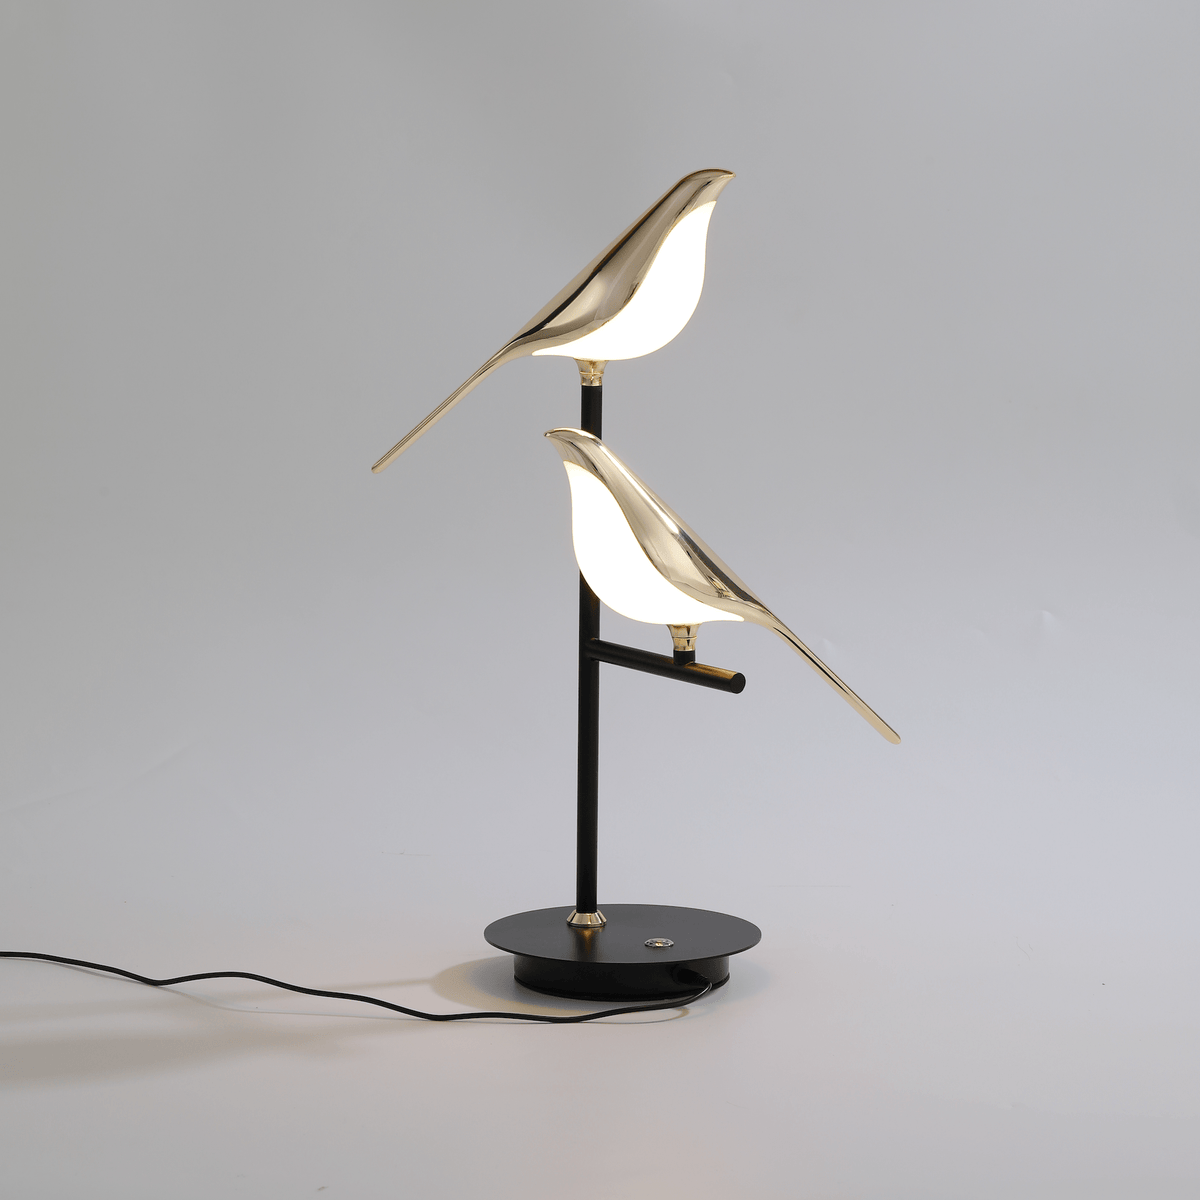 Golden Bird Table Lamp for Bedroom